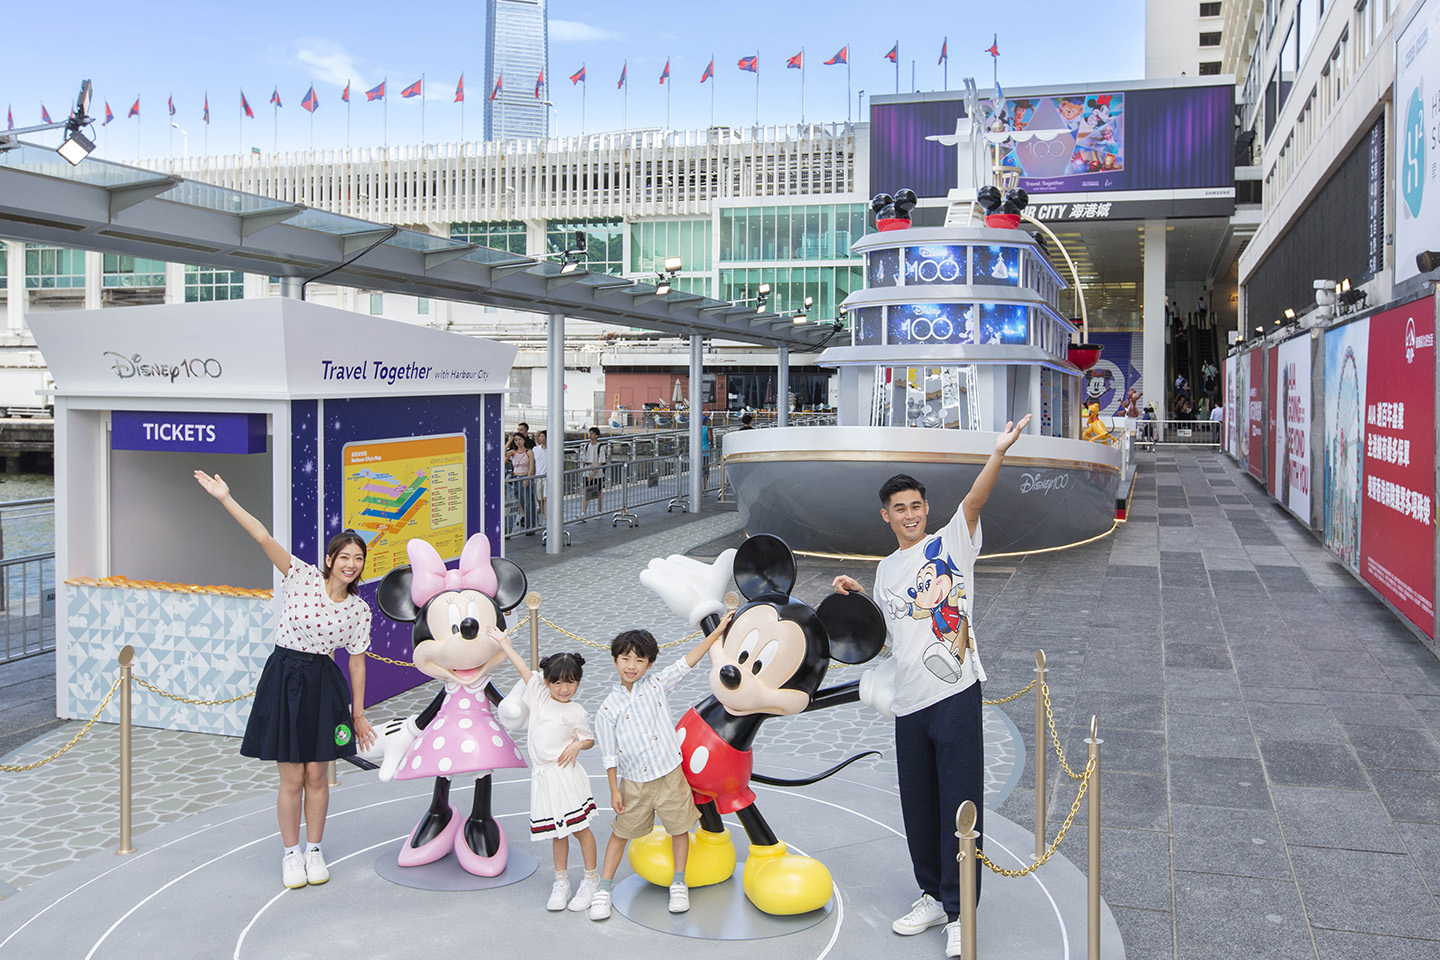 Sea Explorer - Disney 100th anniversary event in Hong Kong